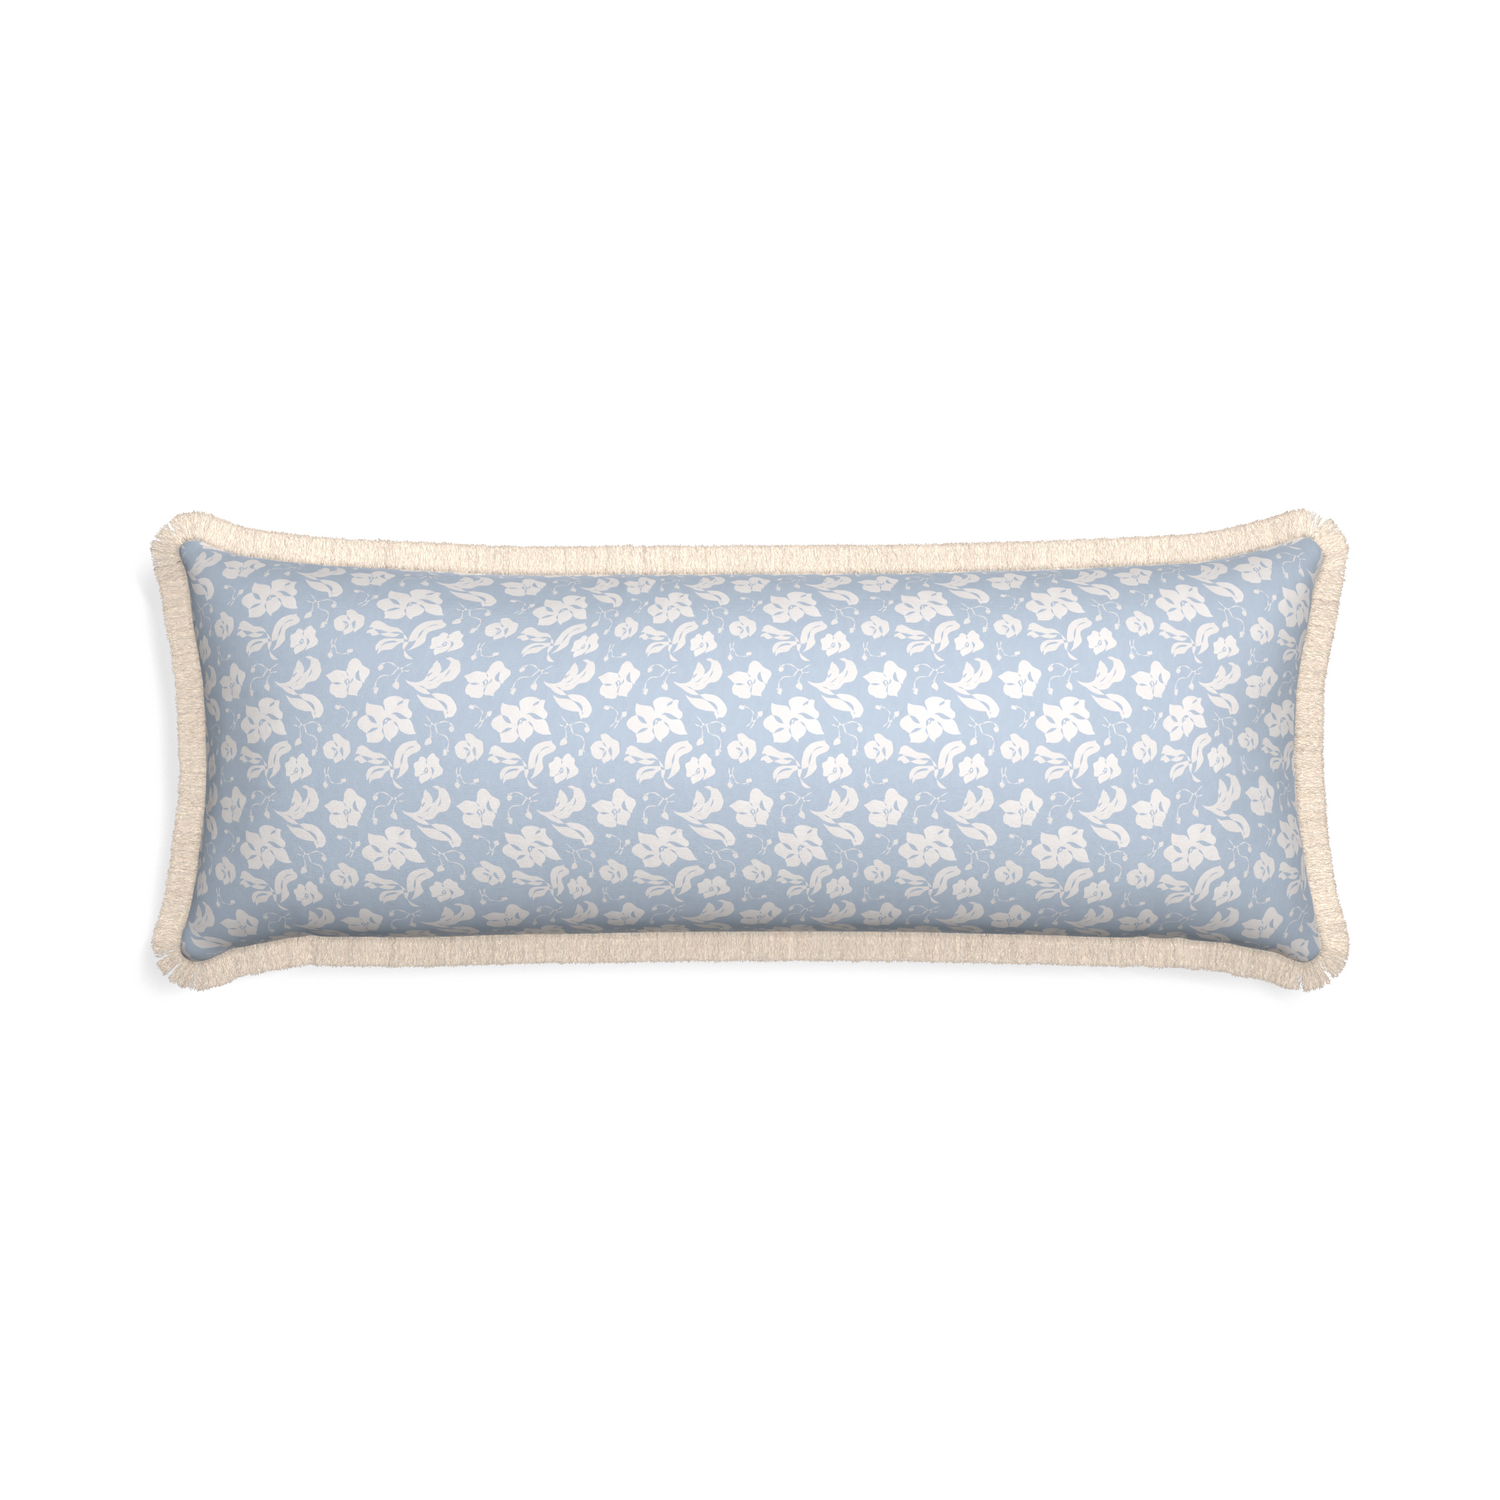 Xl-lumbar georgia custom pillow with cream fringe on white background